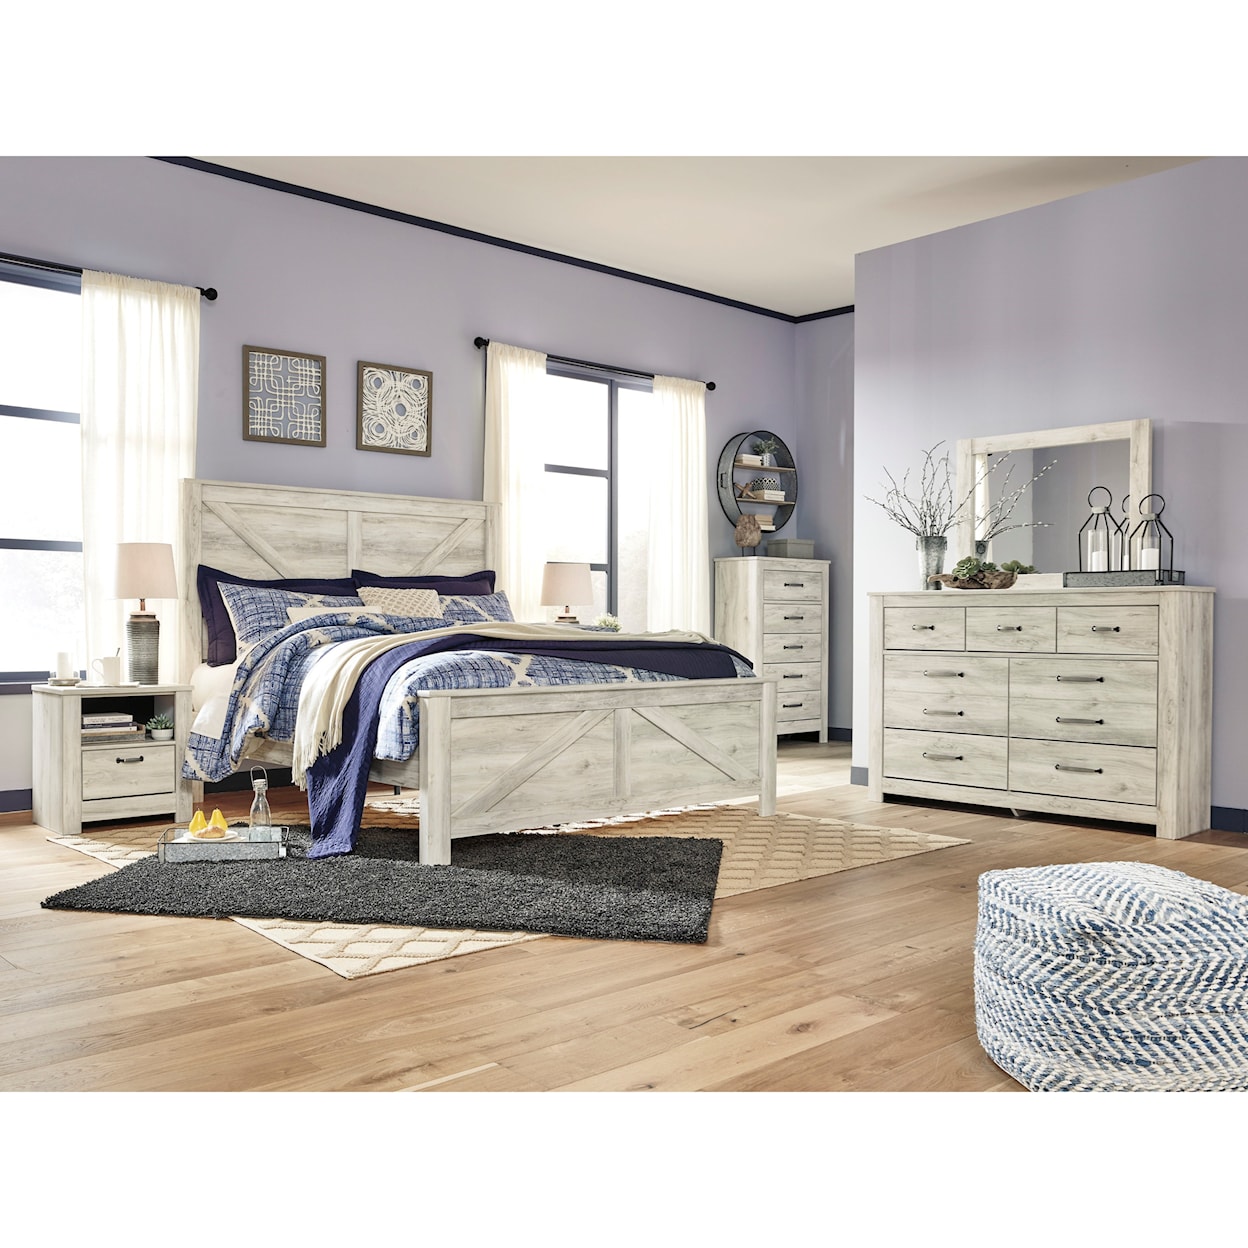 Ashley Furniture Signature Design Bellaby King Bedroom Group